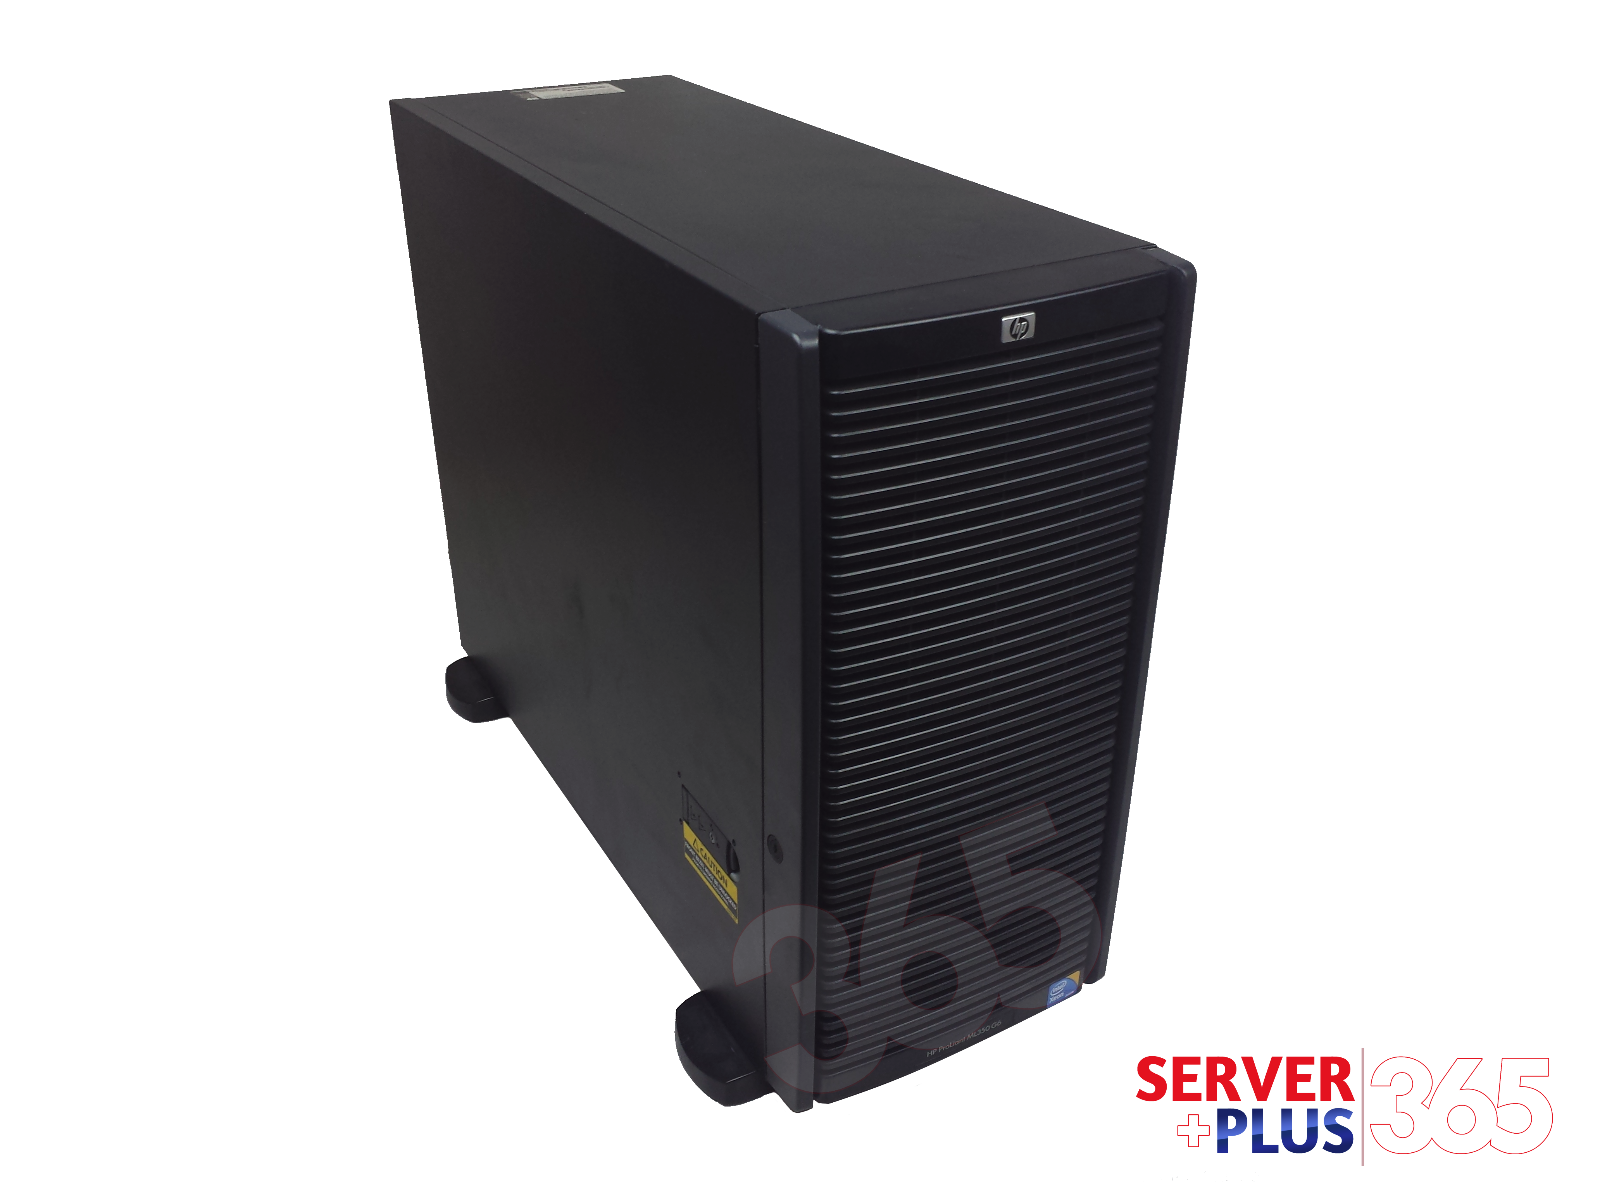 hp proliant g6 server manual